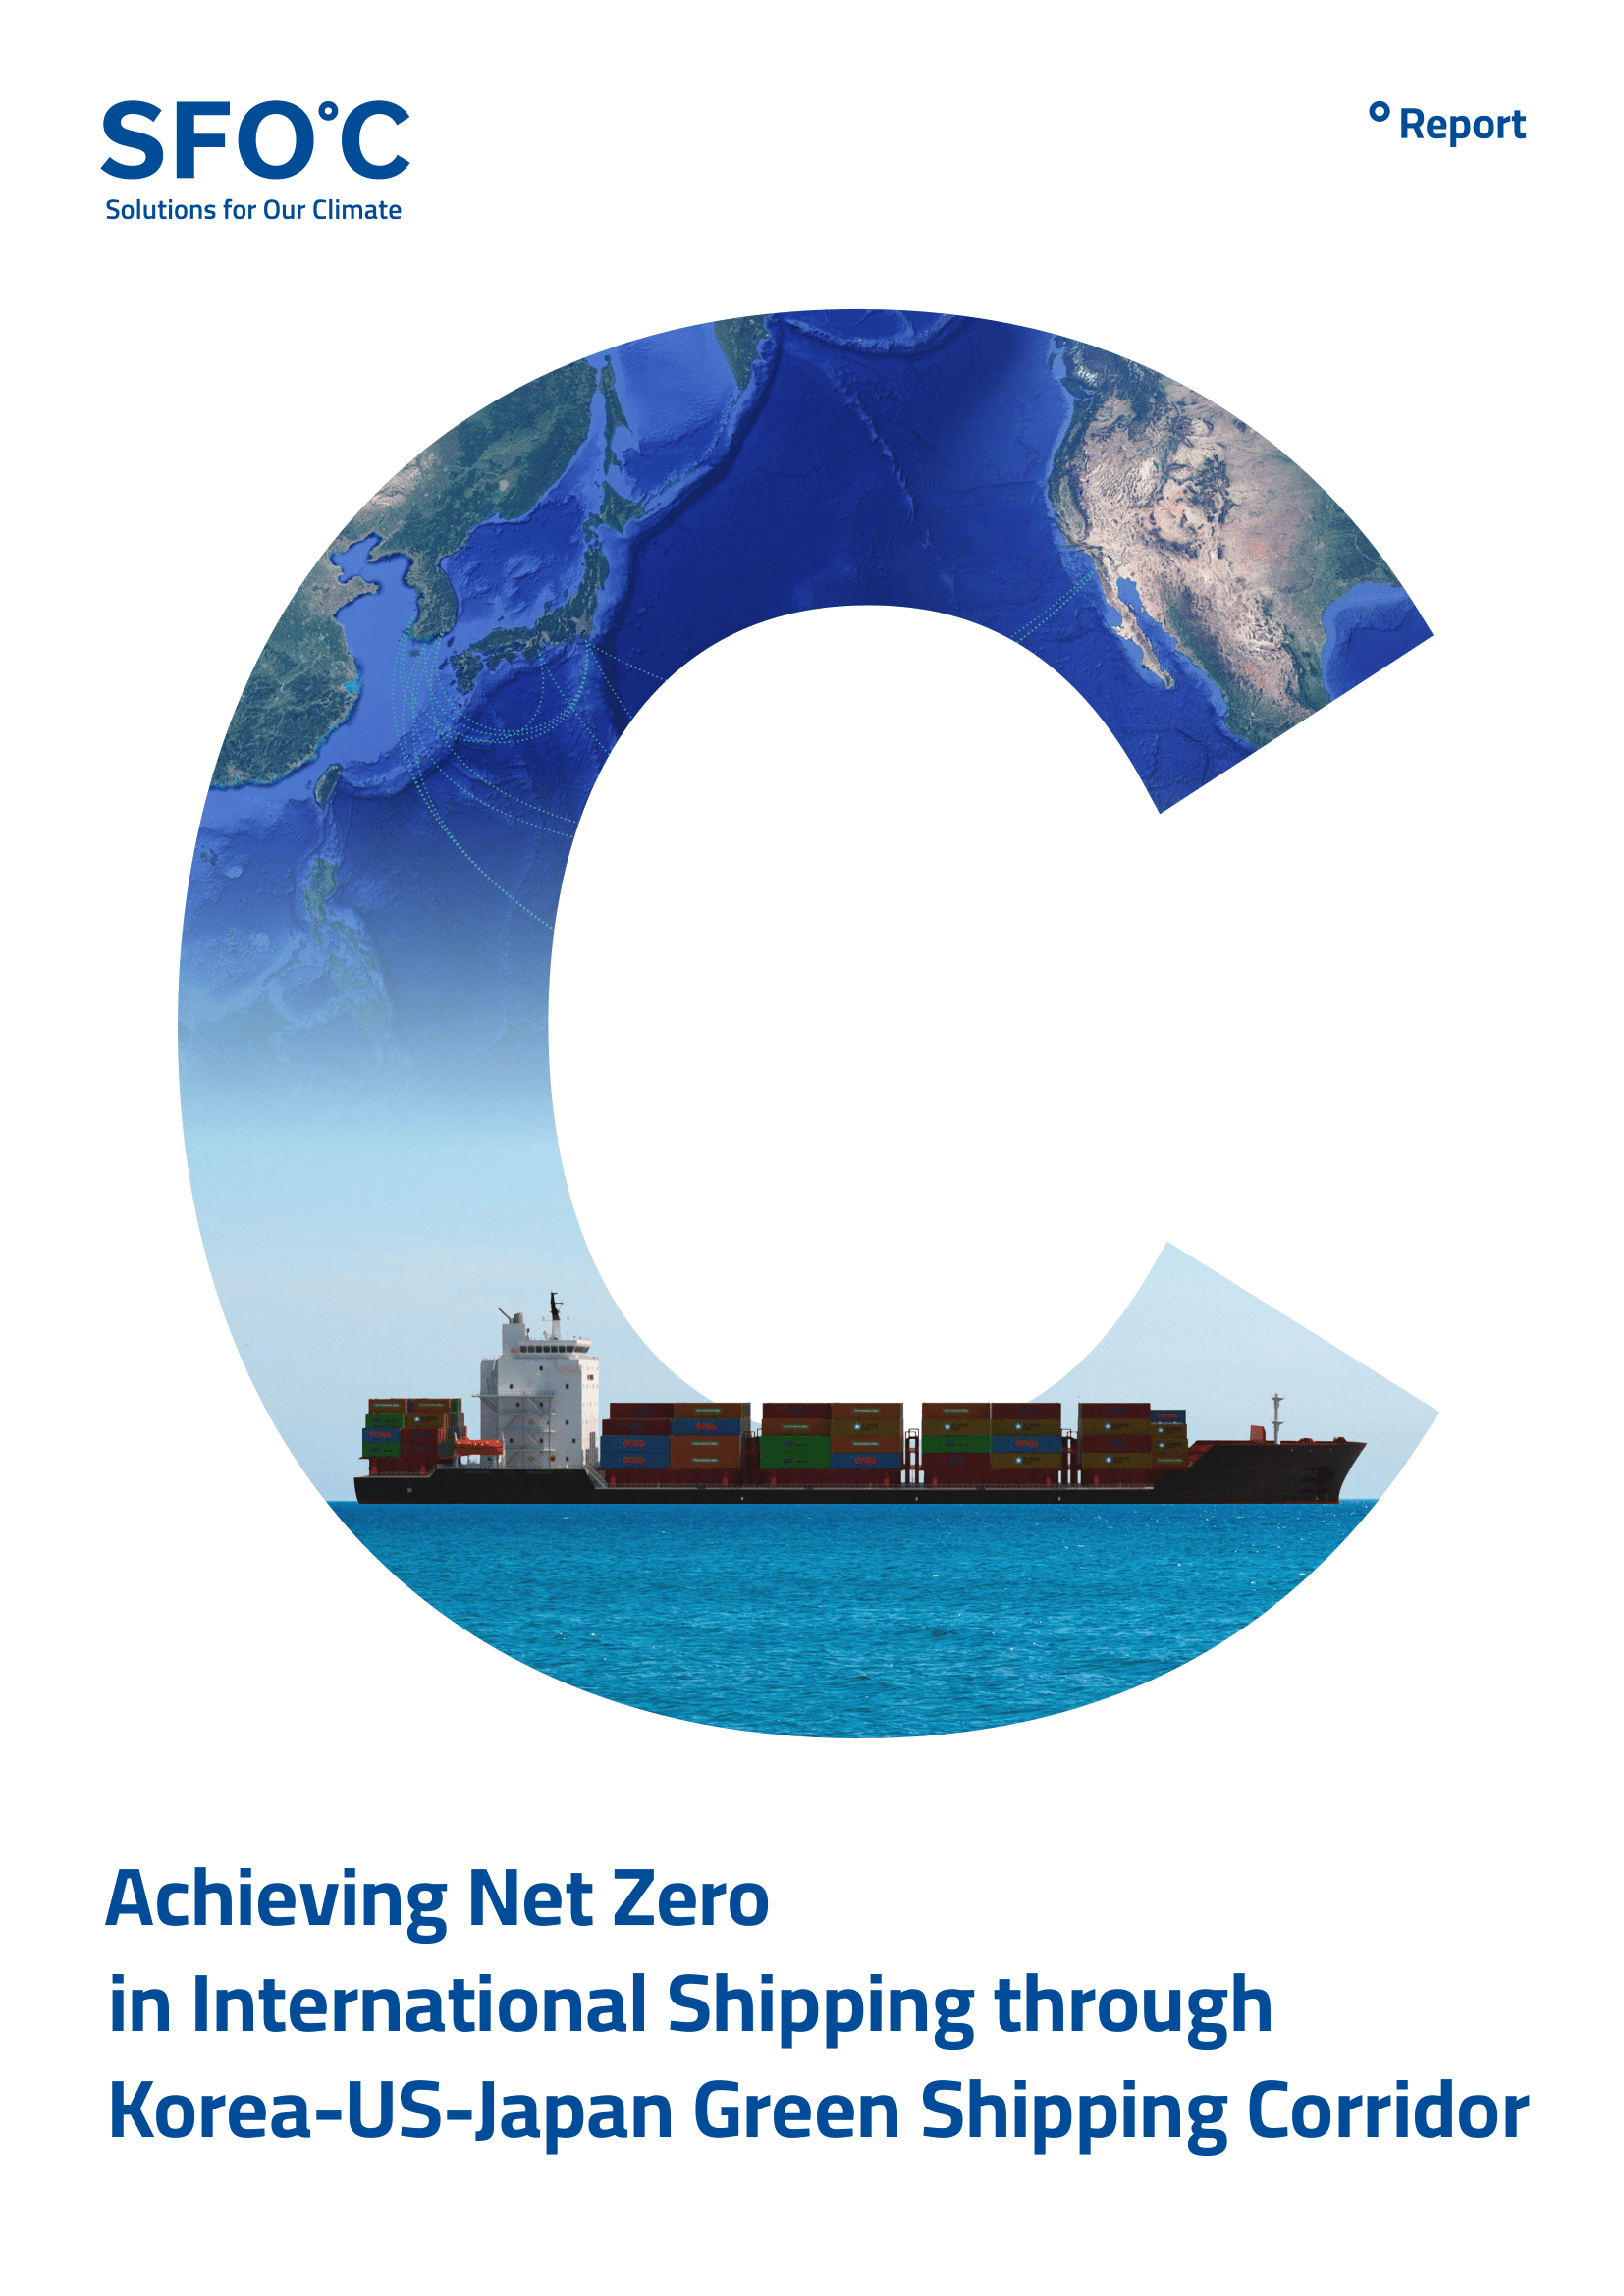 [Report] Achieving Net Zero in International Shipping through Korea-US-Japan Green Shipping Corridor